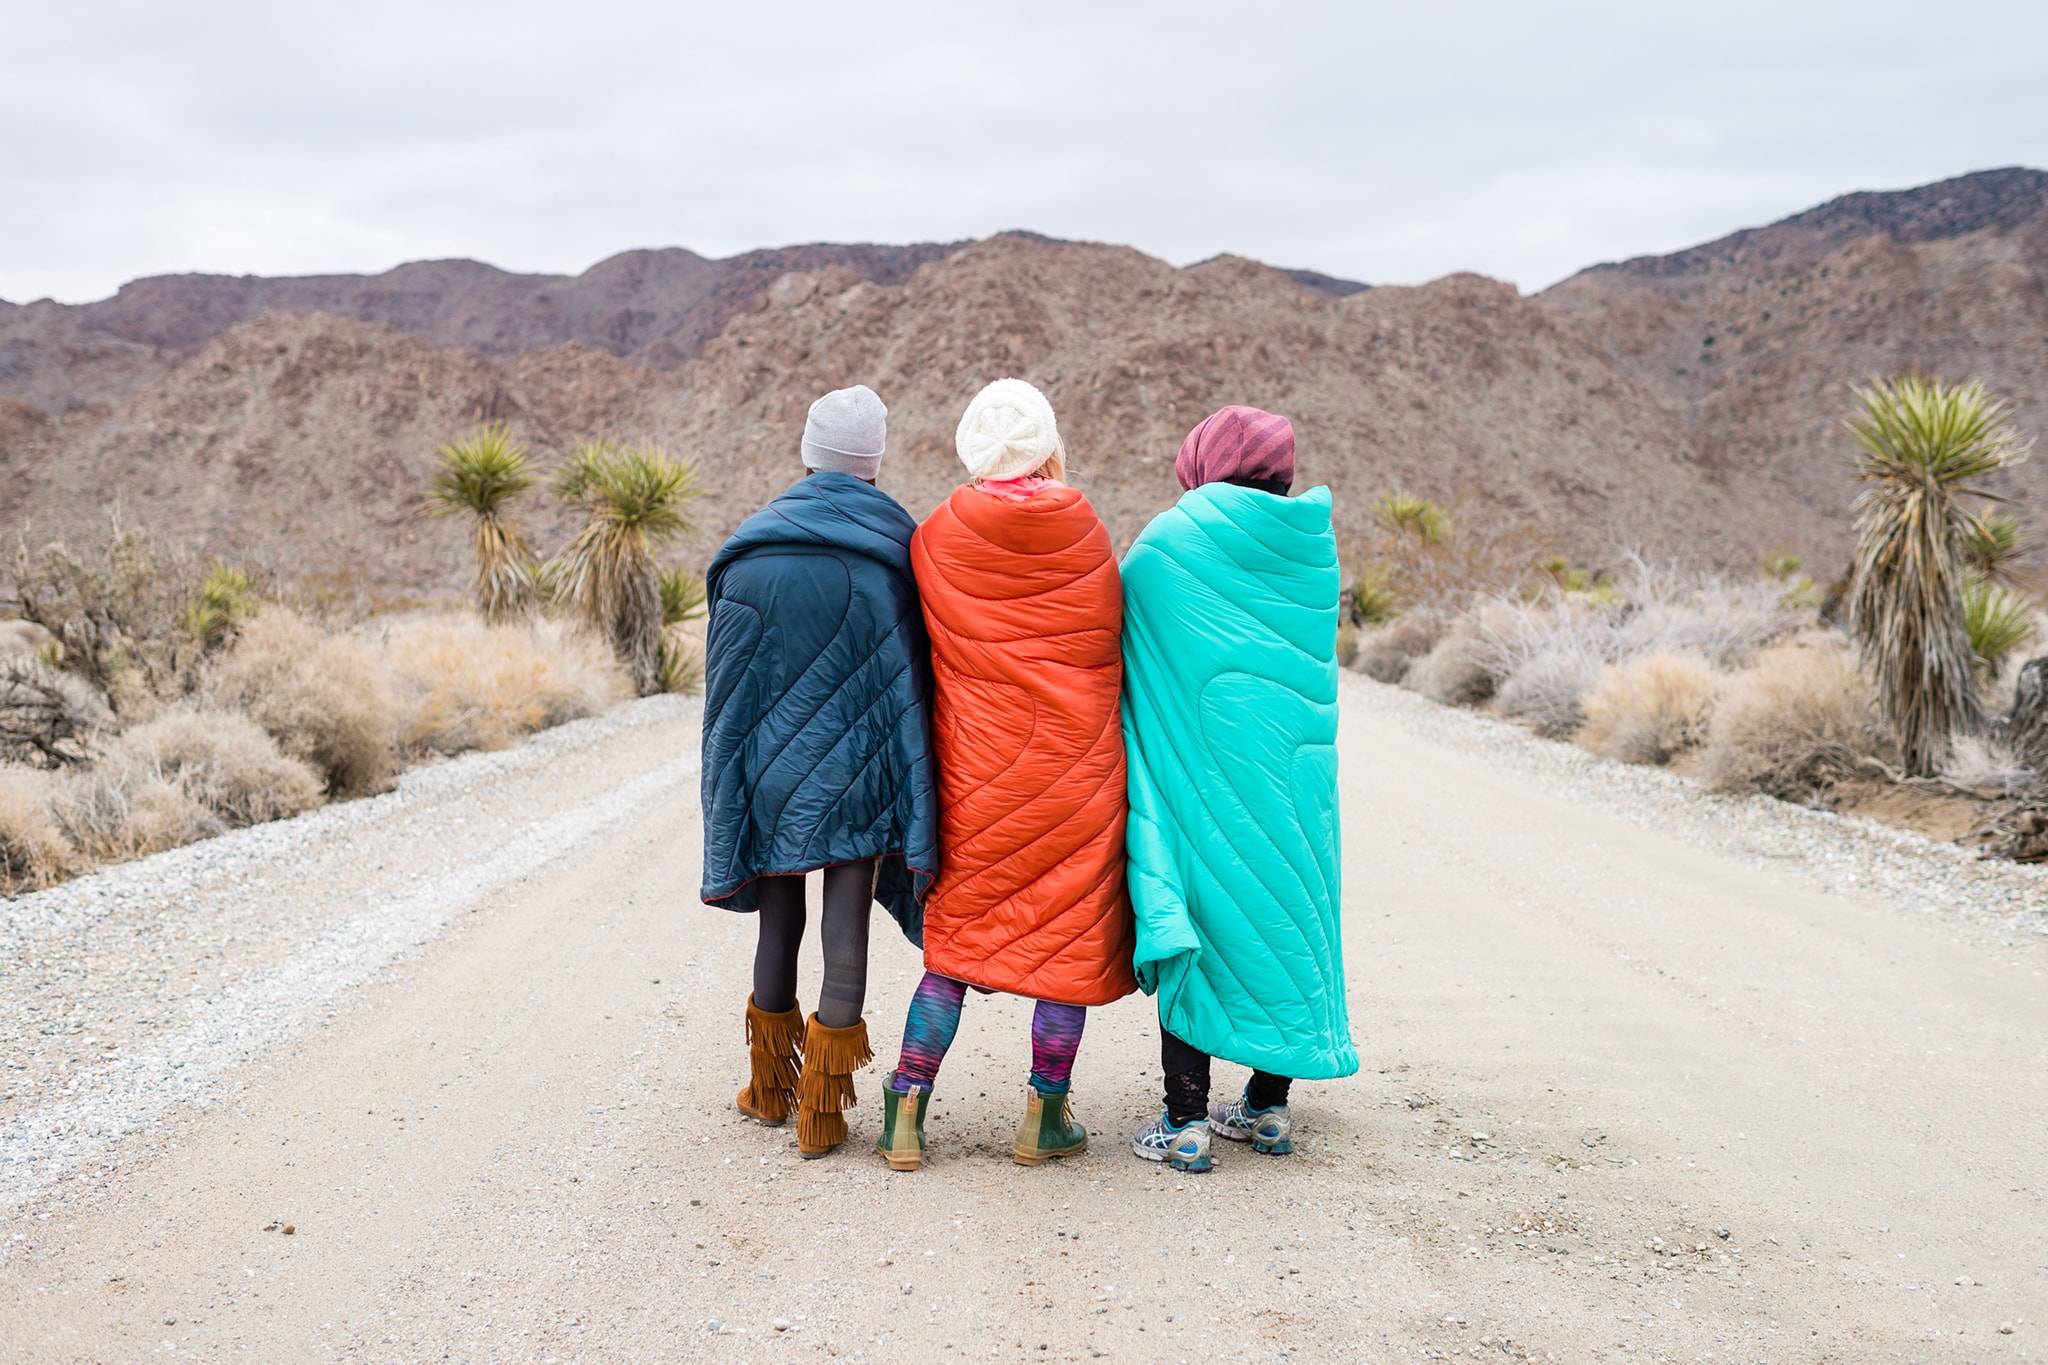 Group of three women standing in Rumpl blankets in Joshua Tree National Park